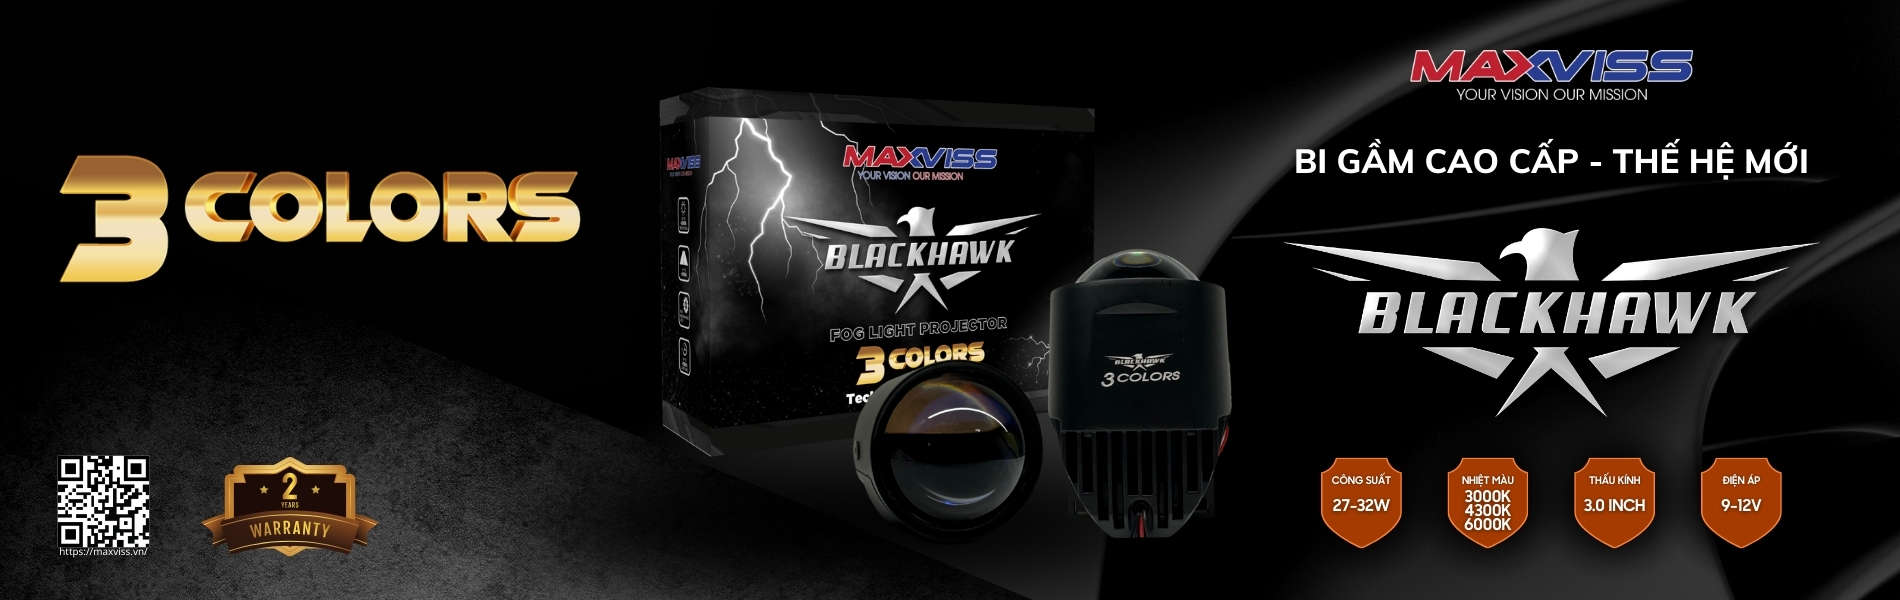 BI GẦM LED MAXVISS F9 BLACKHAWK 3 CHẾ ĐỘ